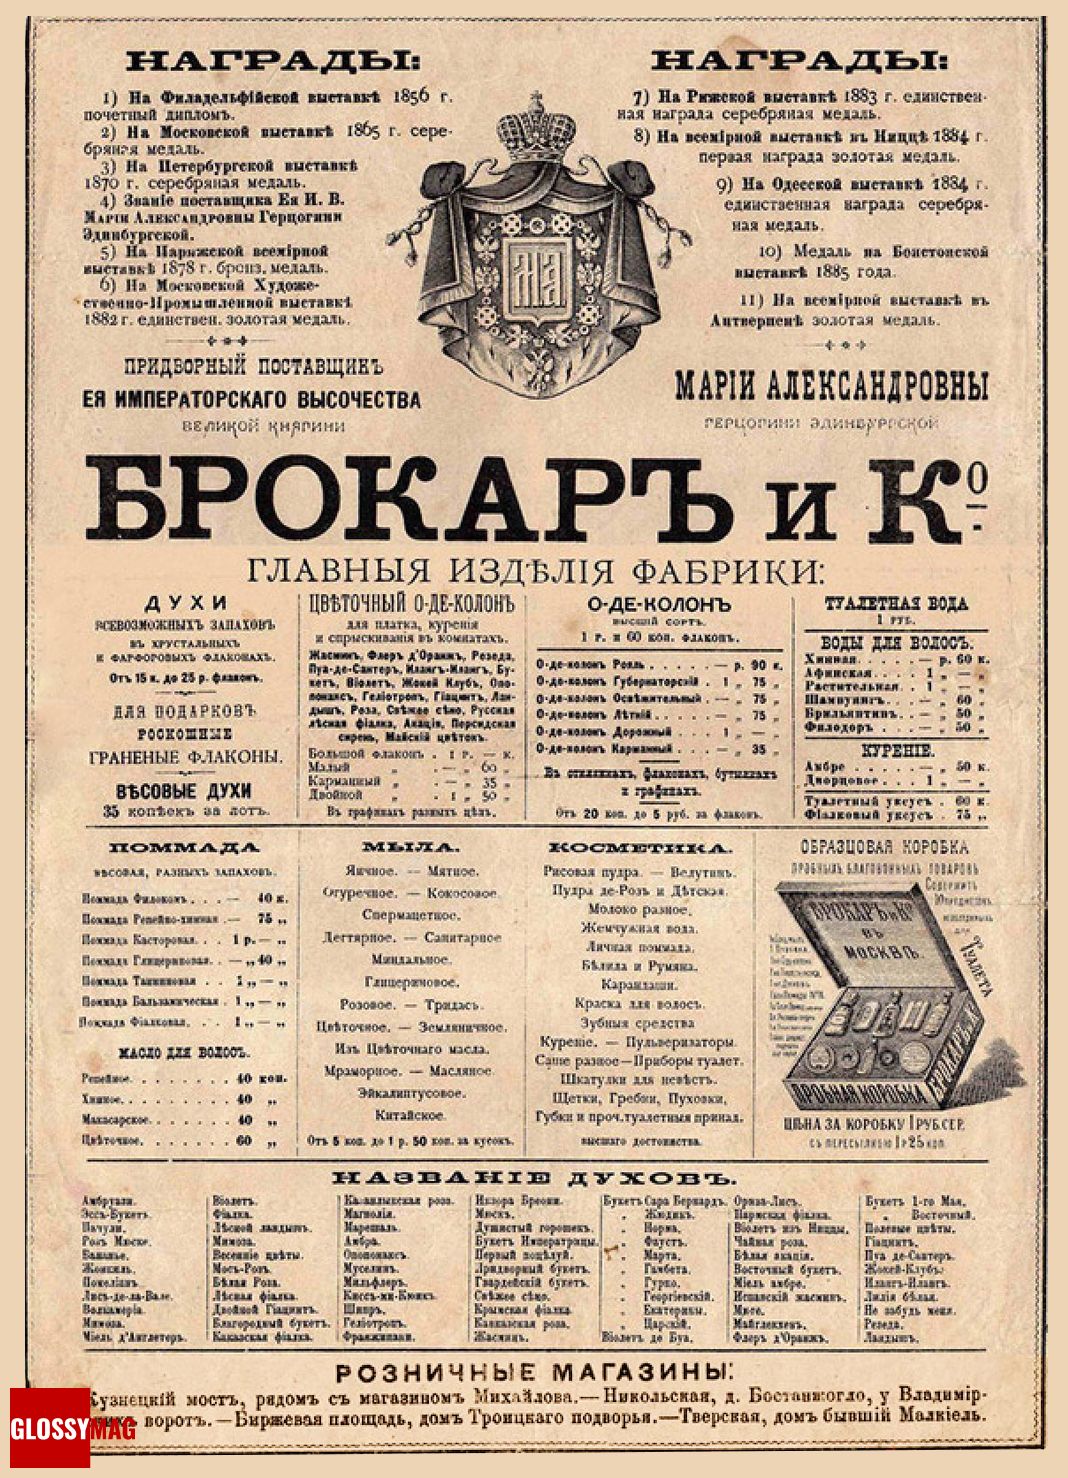 Рекламная листовка фабрики «Брокар и Ко»